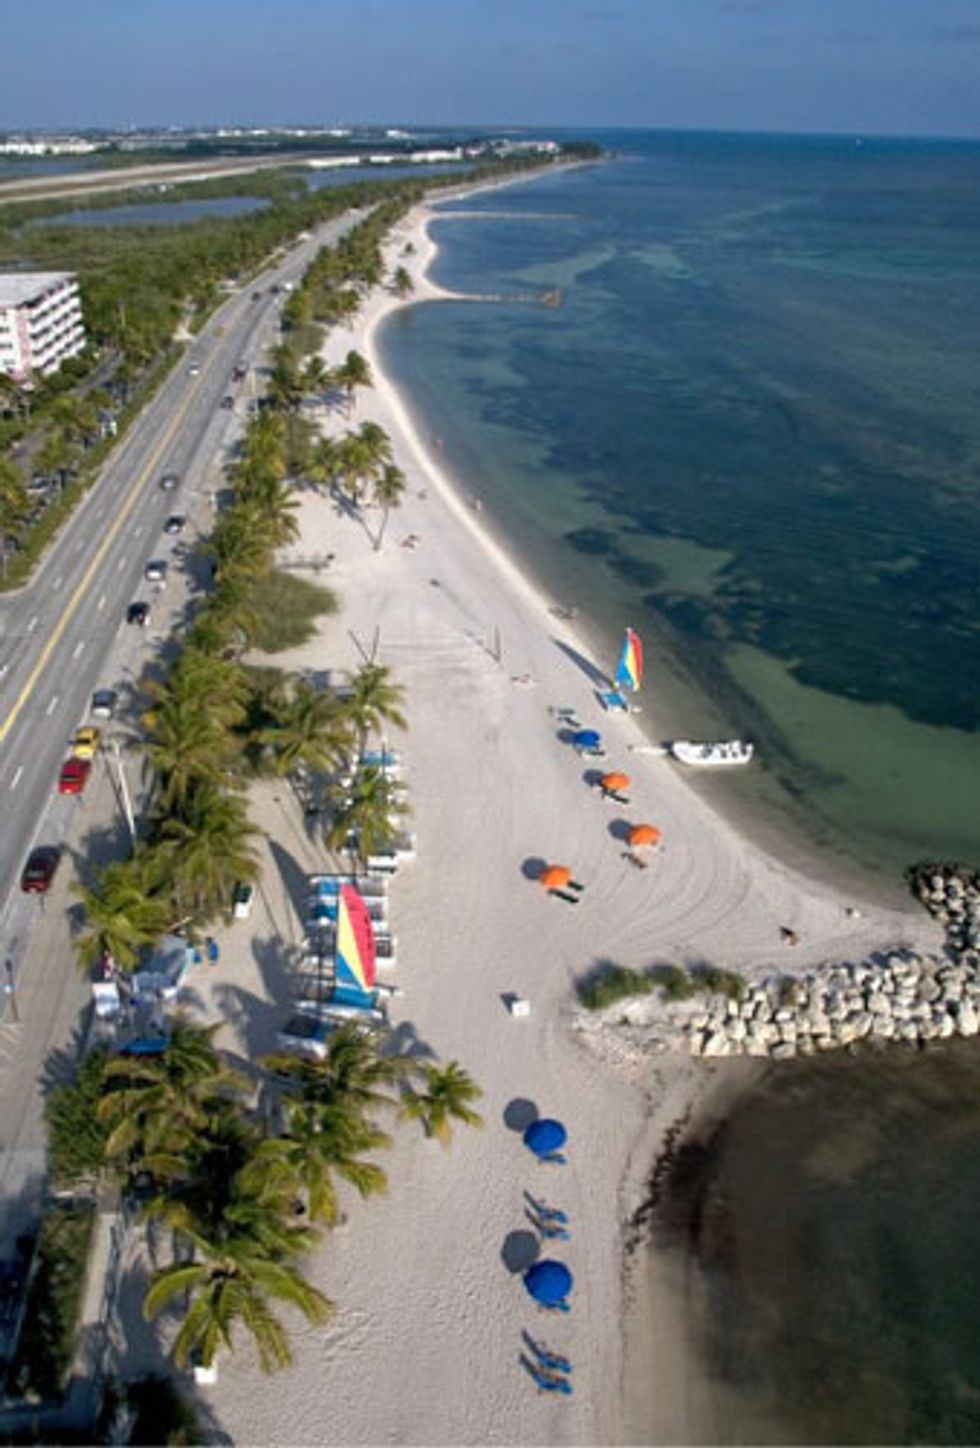 Key West has beautiful beaches. (Photo by Andy Newman/Florida Keys News Bureau)